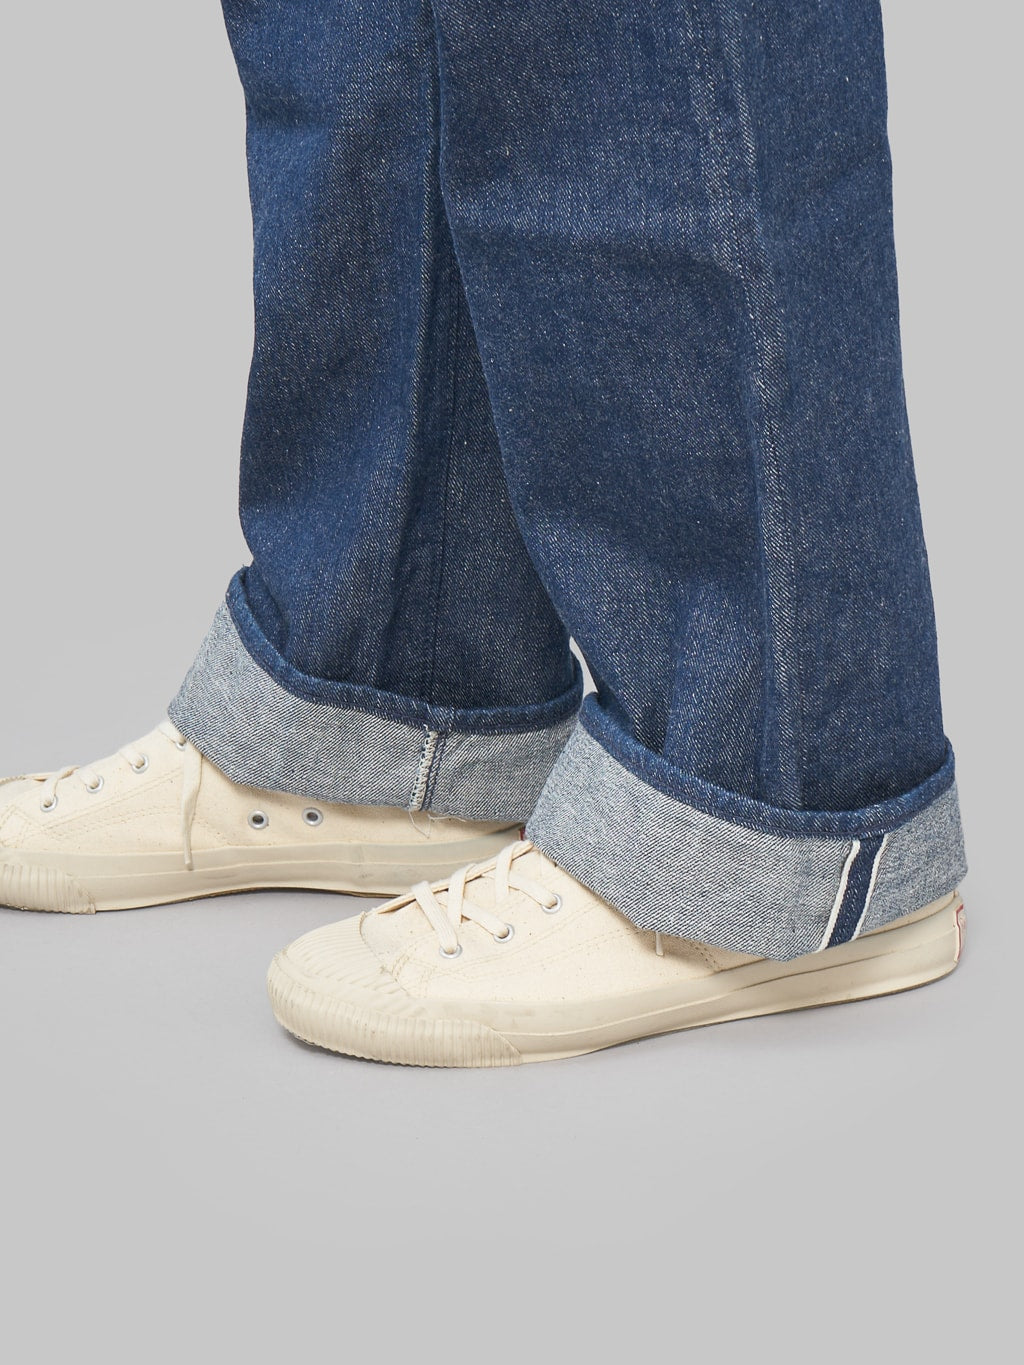 fullcount 1121 duke original selvedge denim super wide jeans selvedge closeup